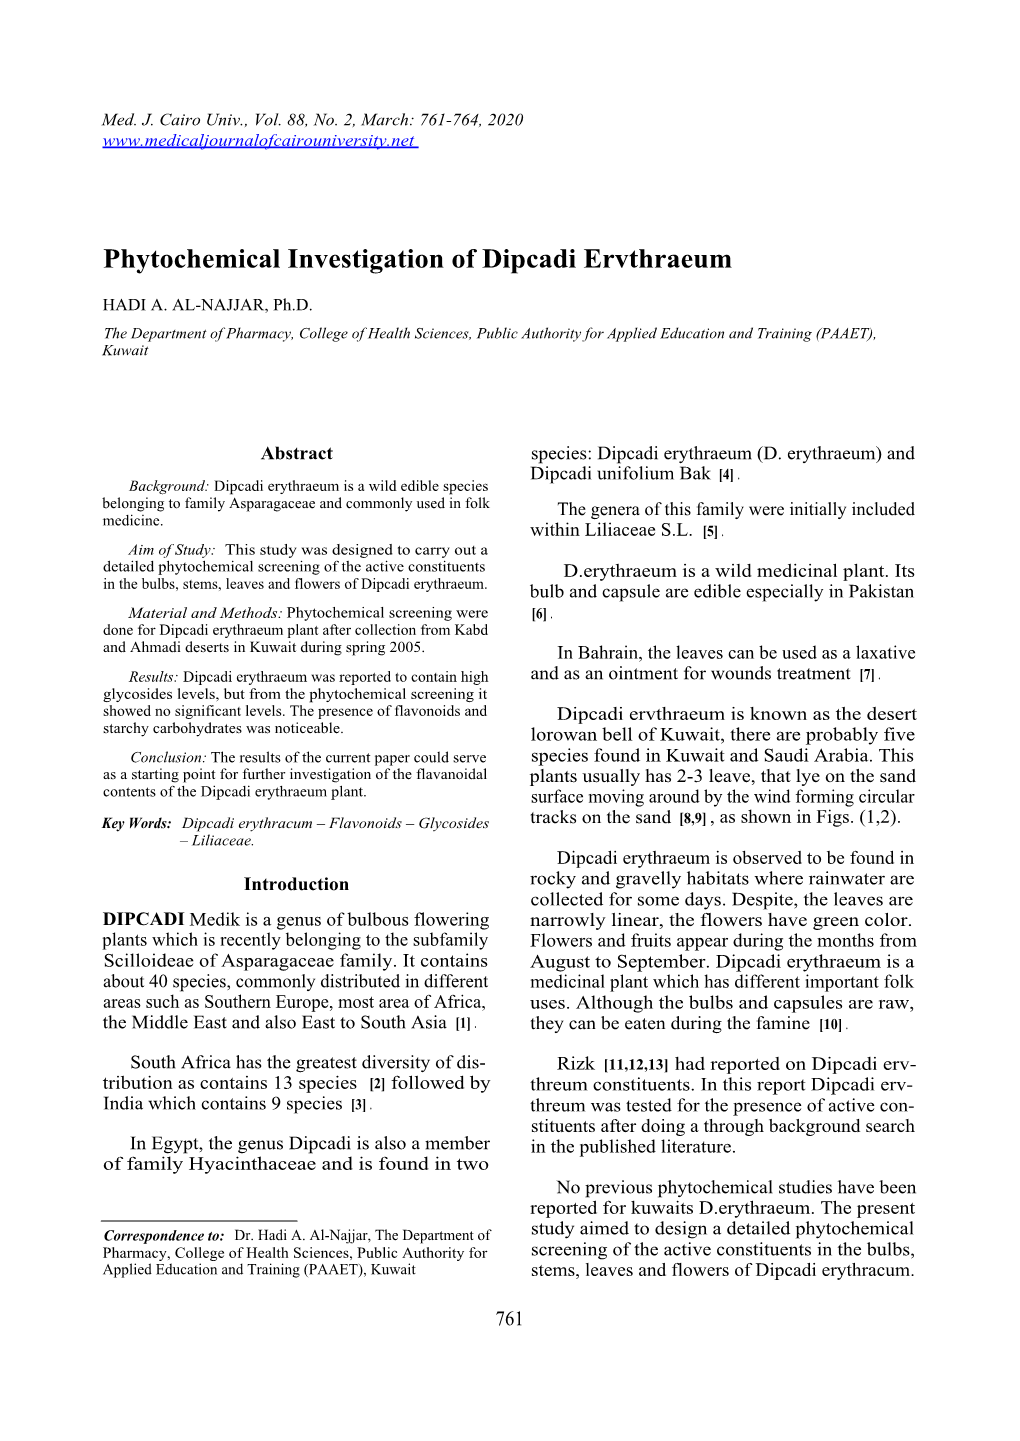 Phytochemical Investigation of Dipcadi Ervthraeum